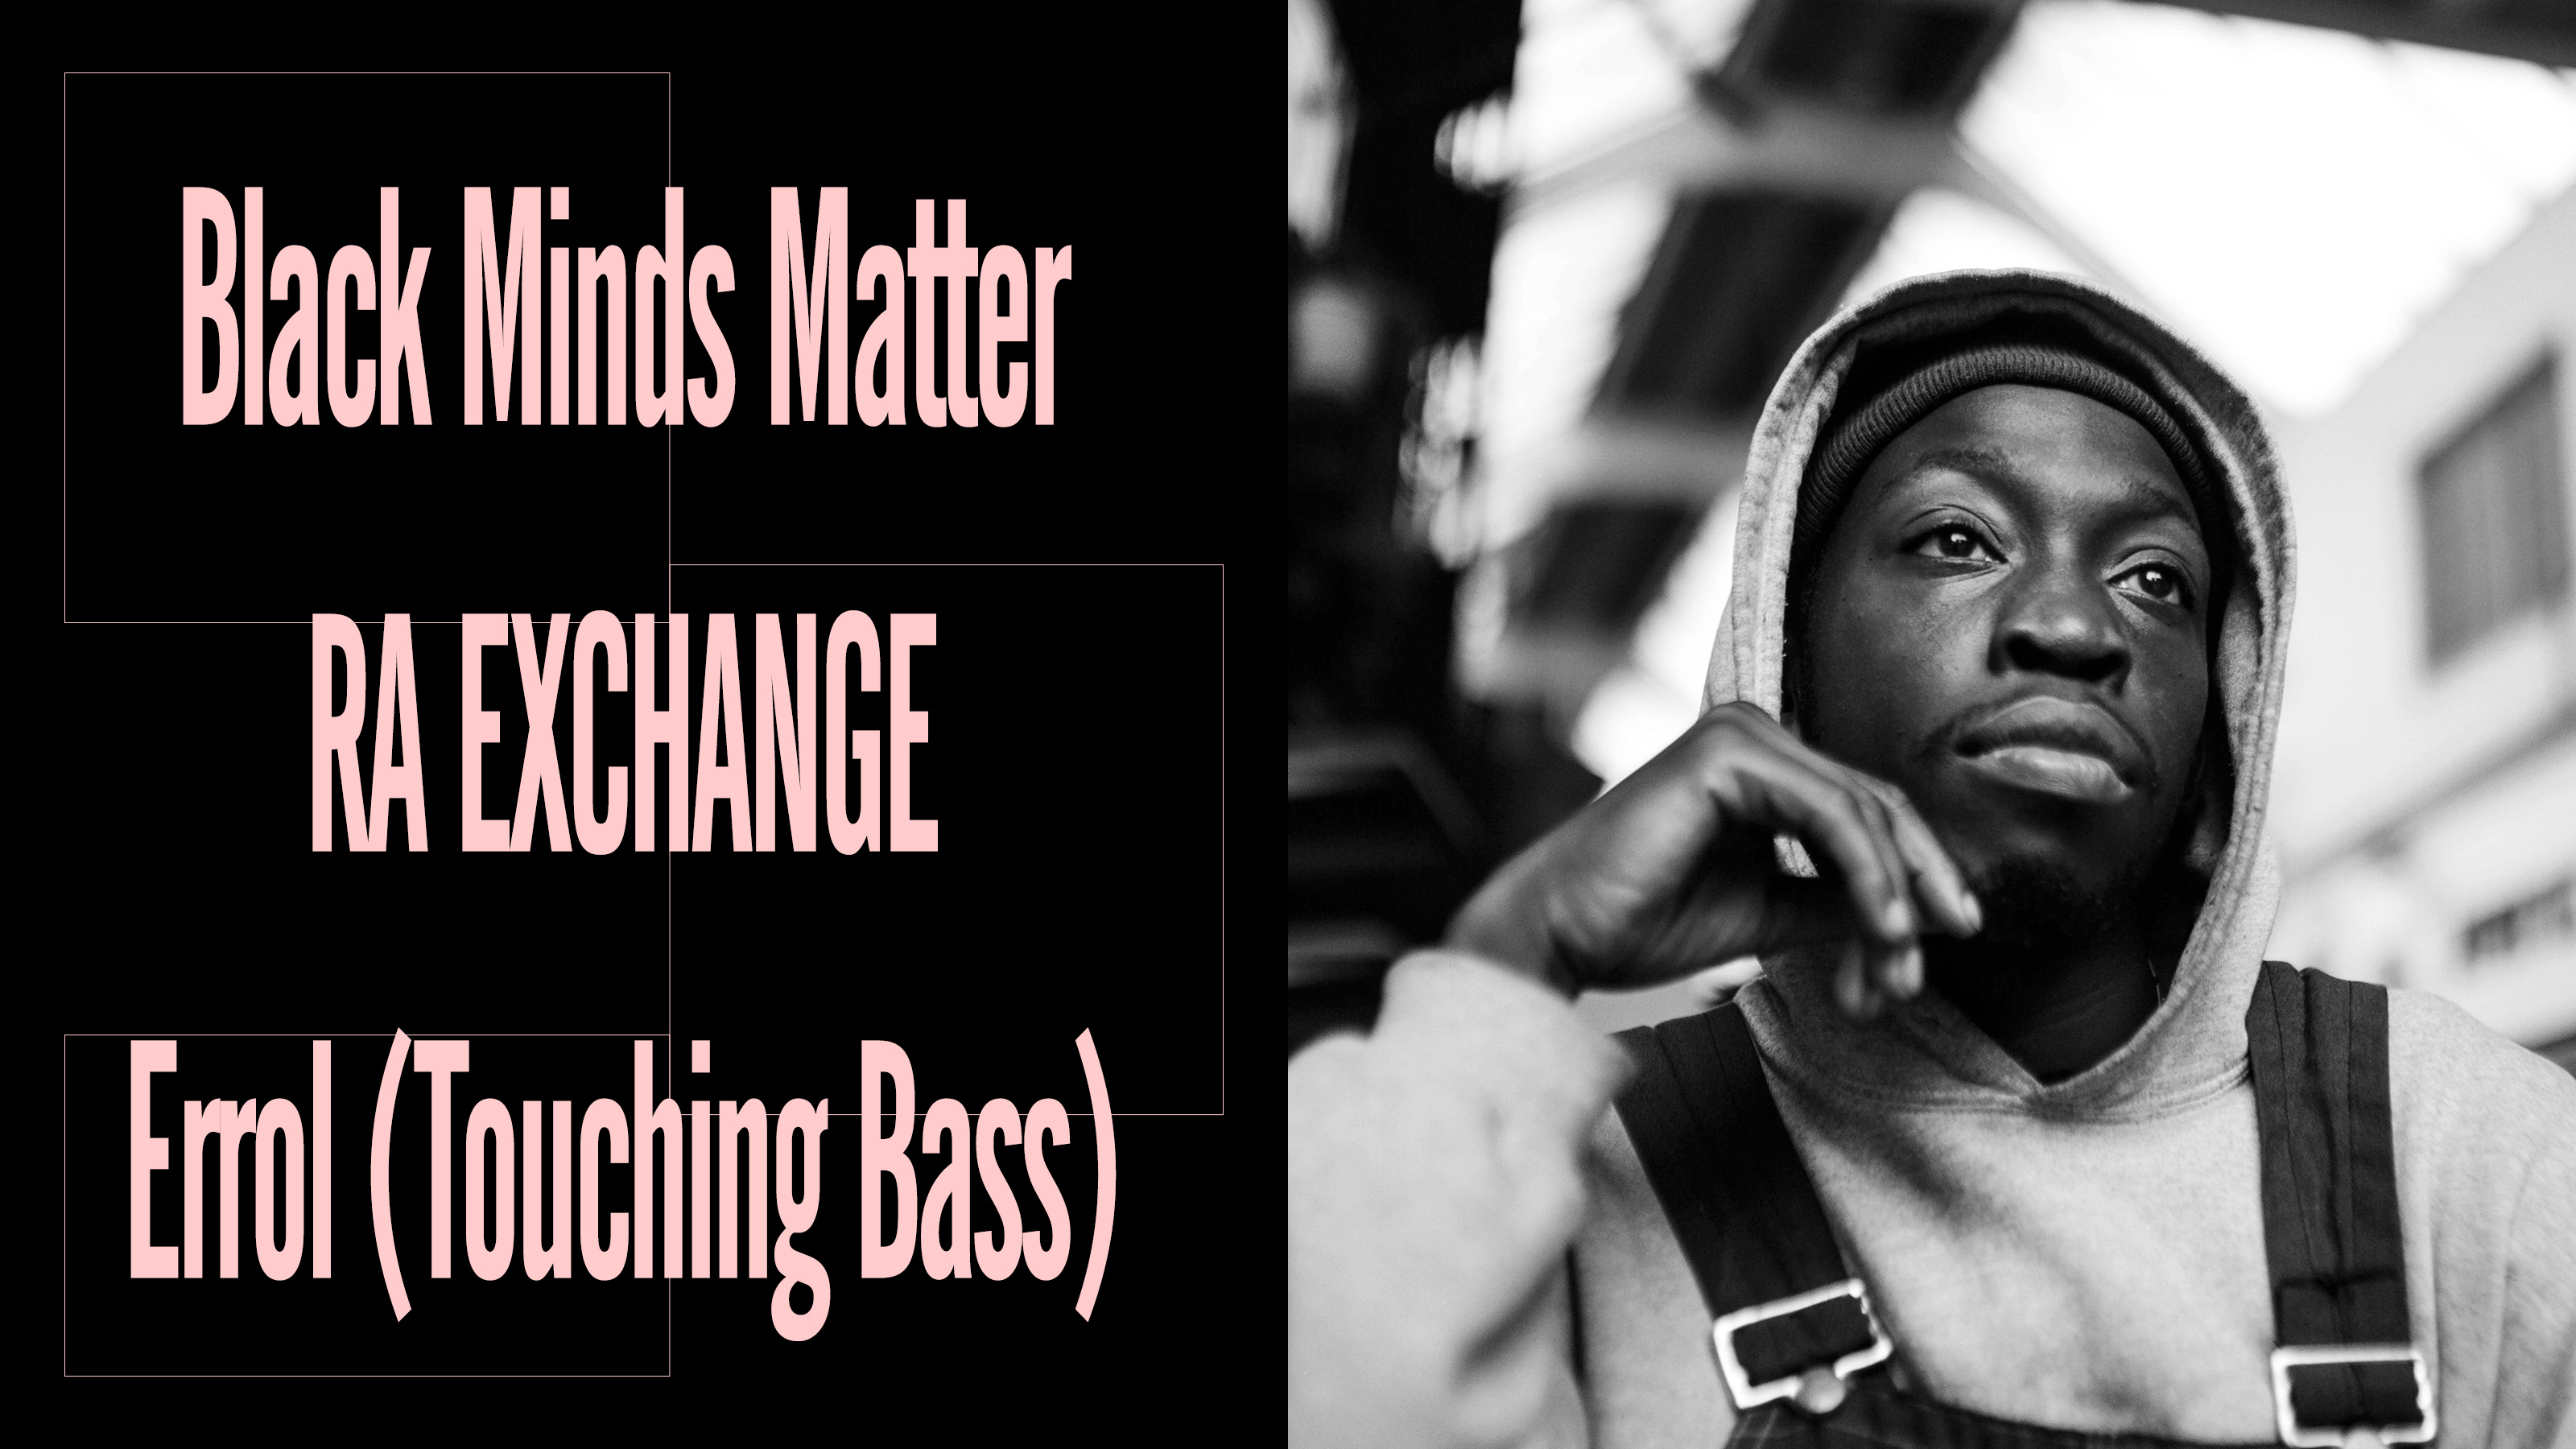 Black Minds Matter UK x RA Exchange: Errol (Touching Bass)